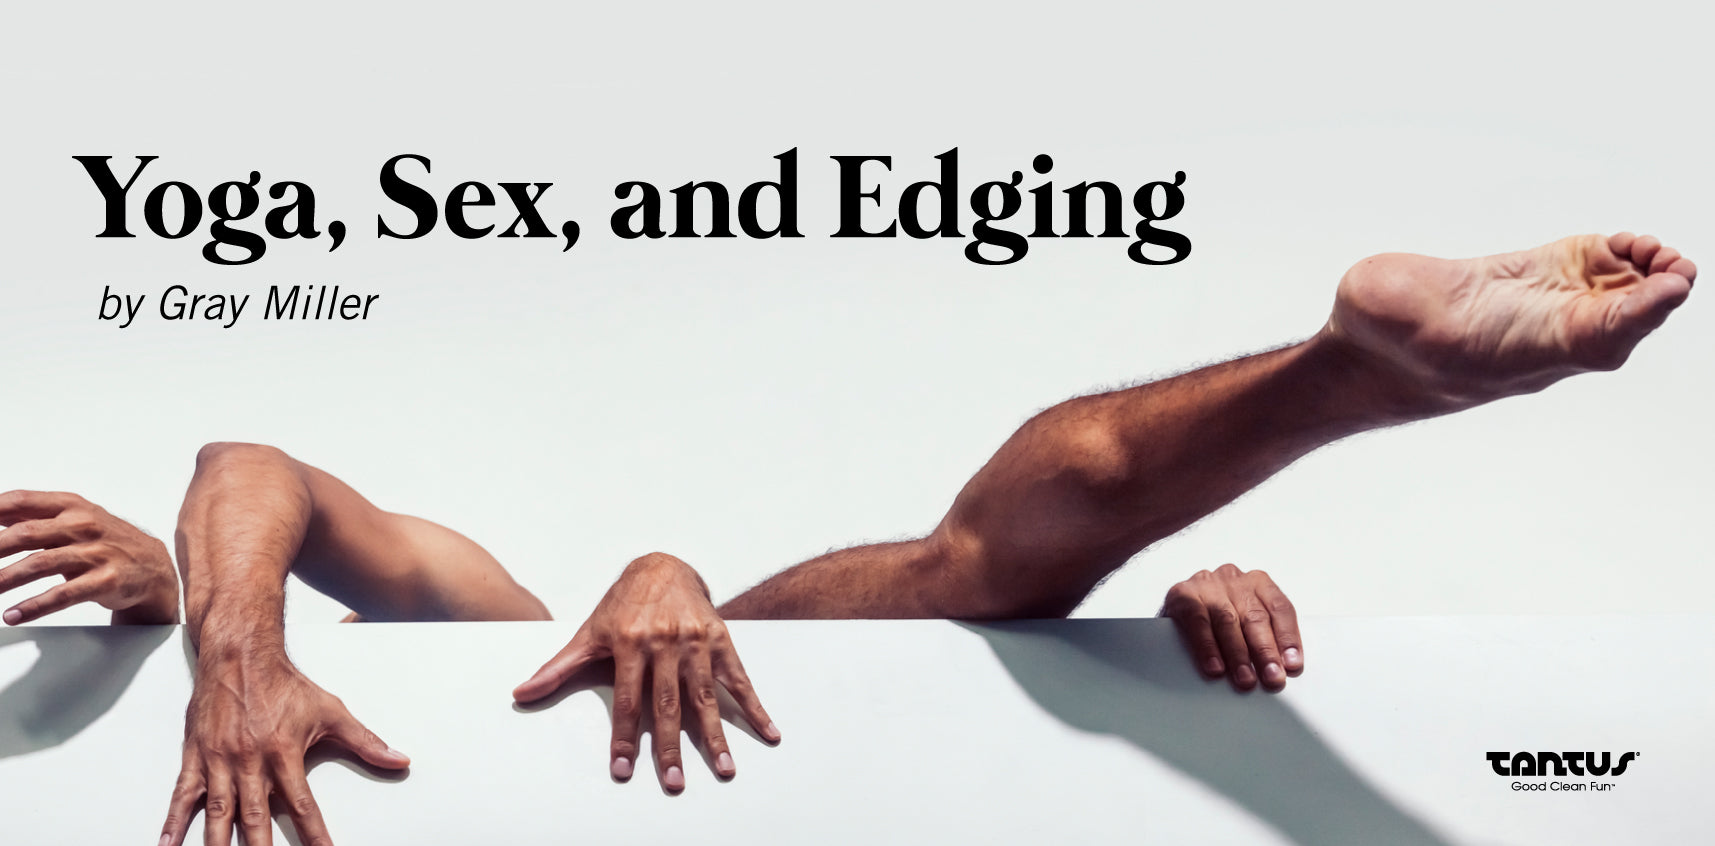 Yoga, Sex and Edging photo photo